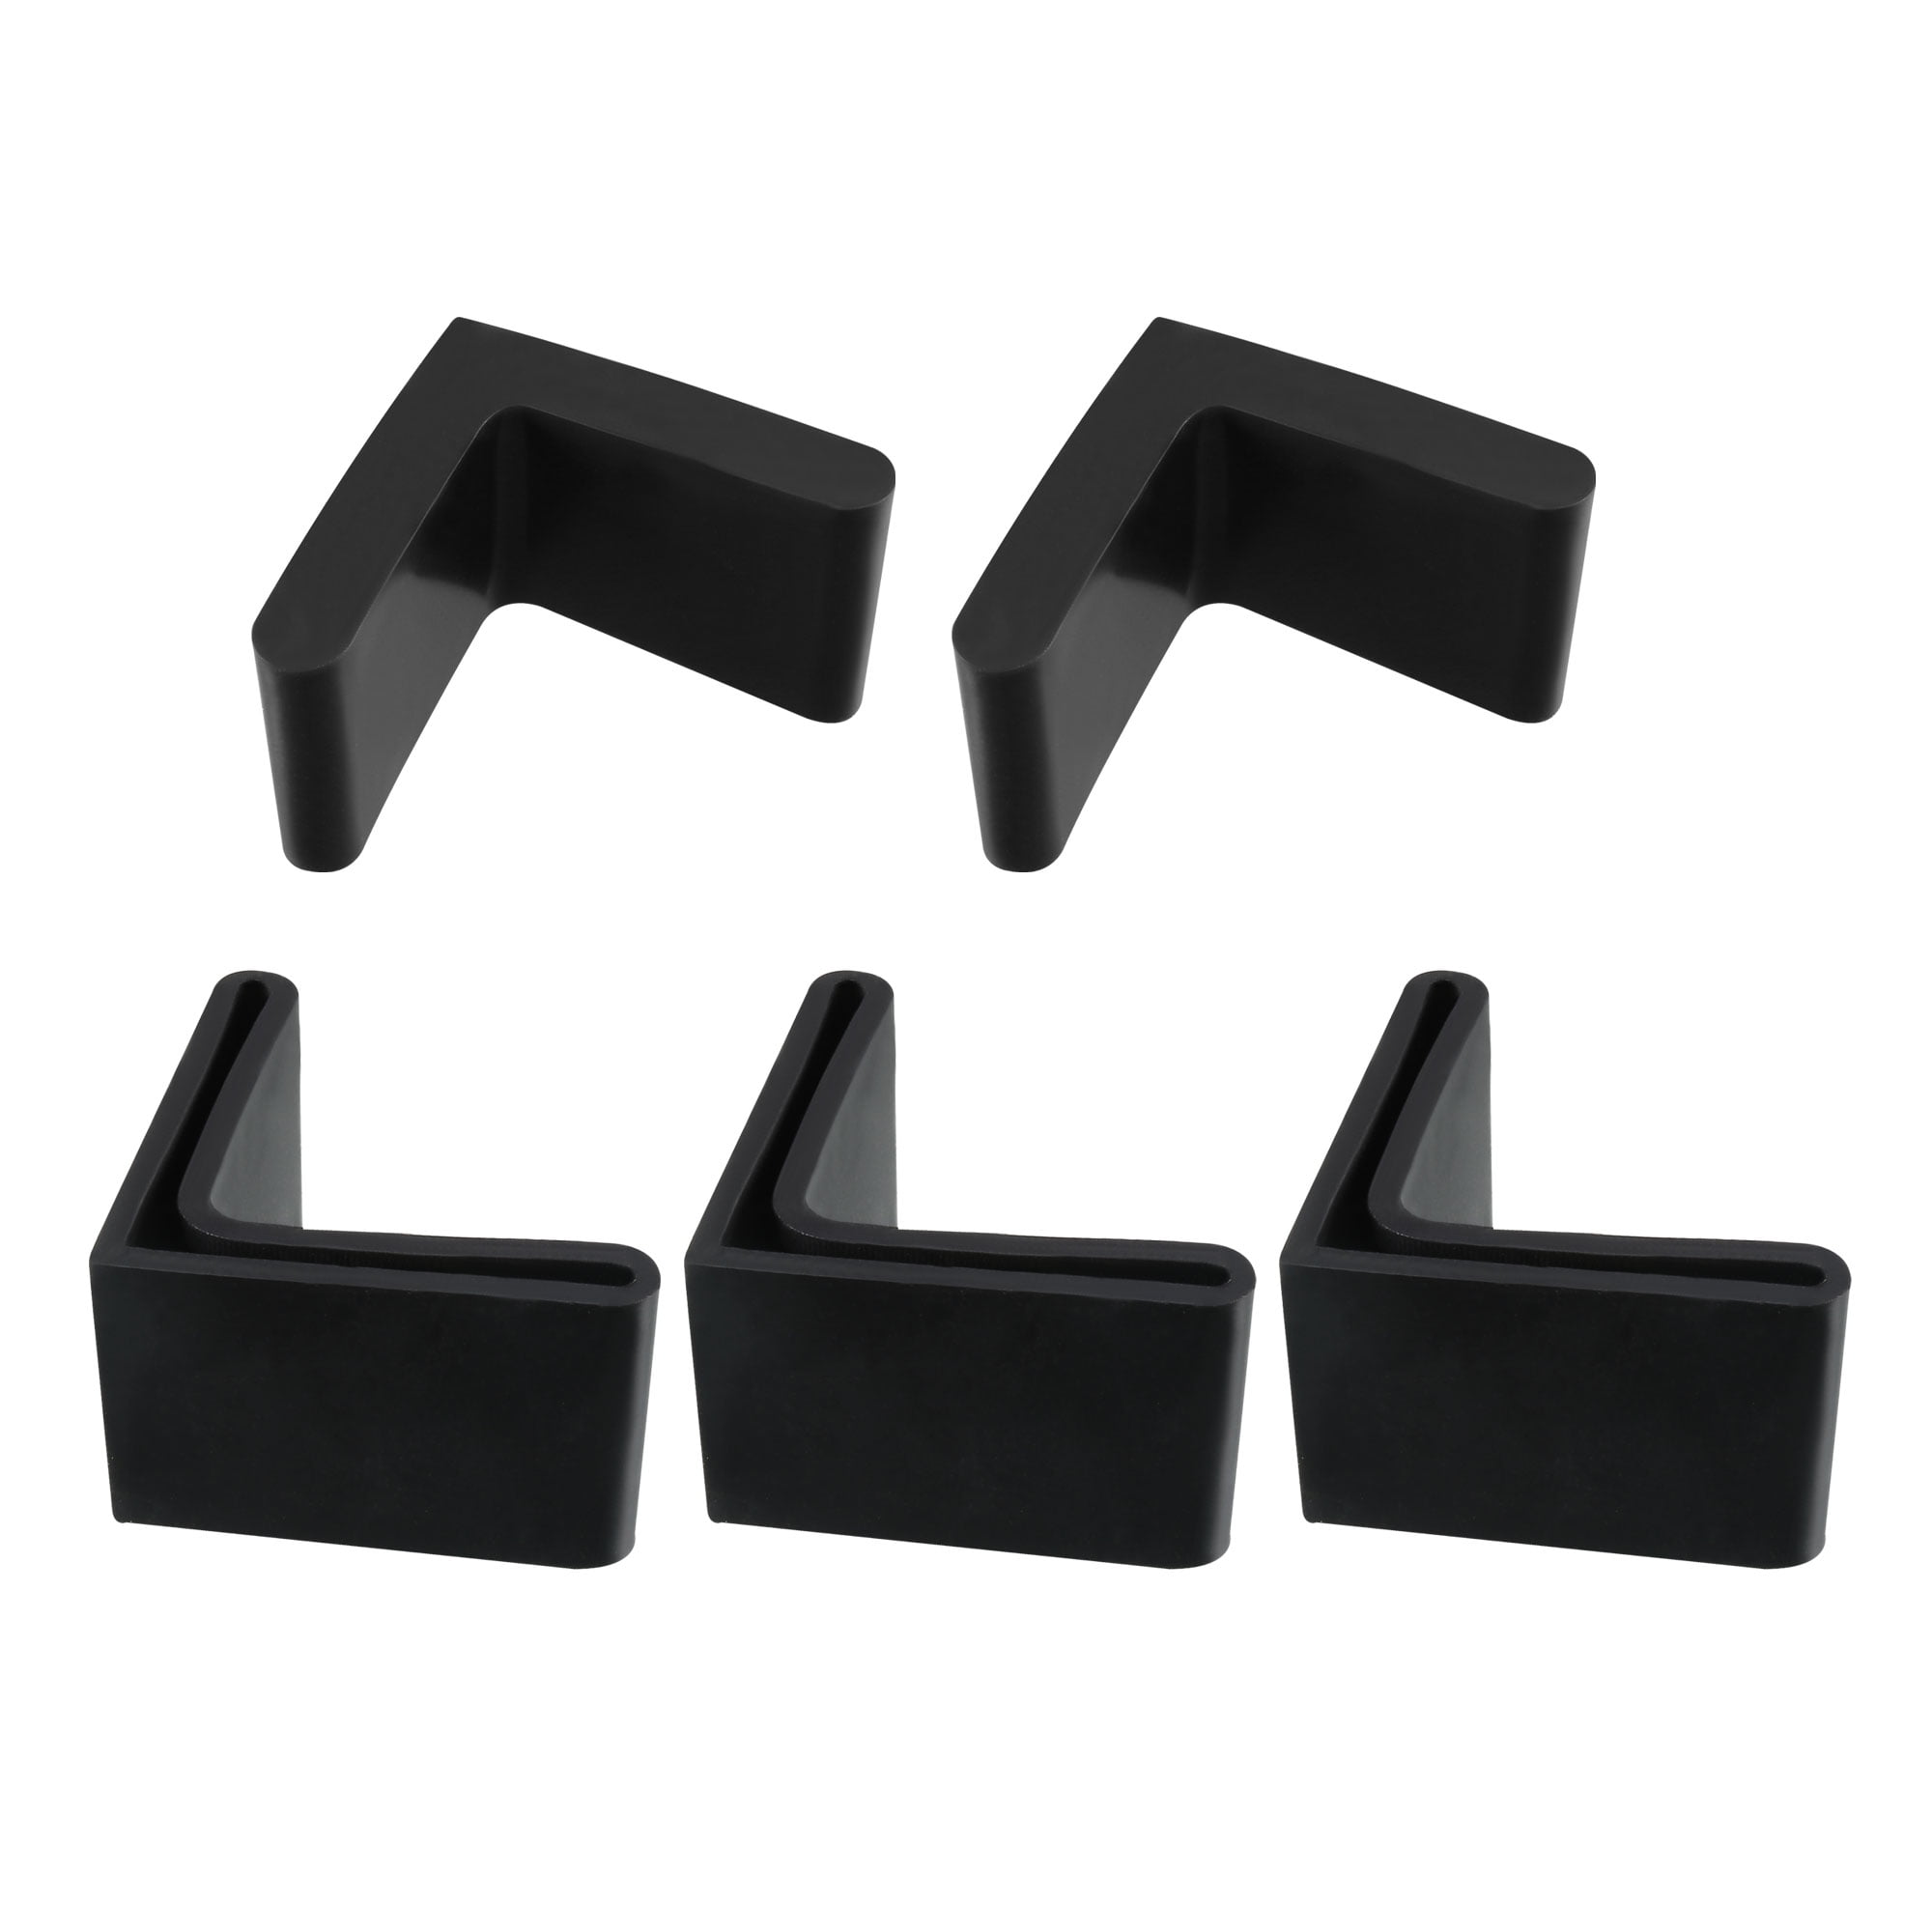 Newest 10 Pcs Black 1" x 1" Furniture Square Rubber Foot Covers Protectors D2B1 